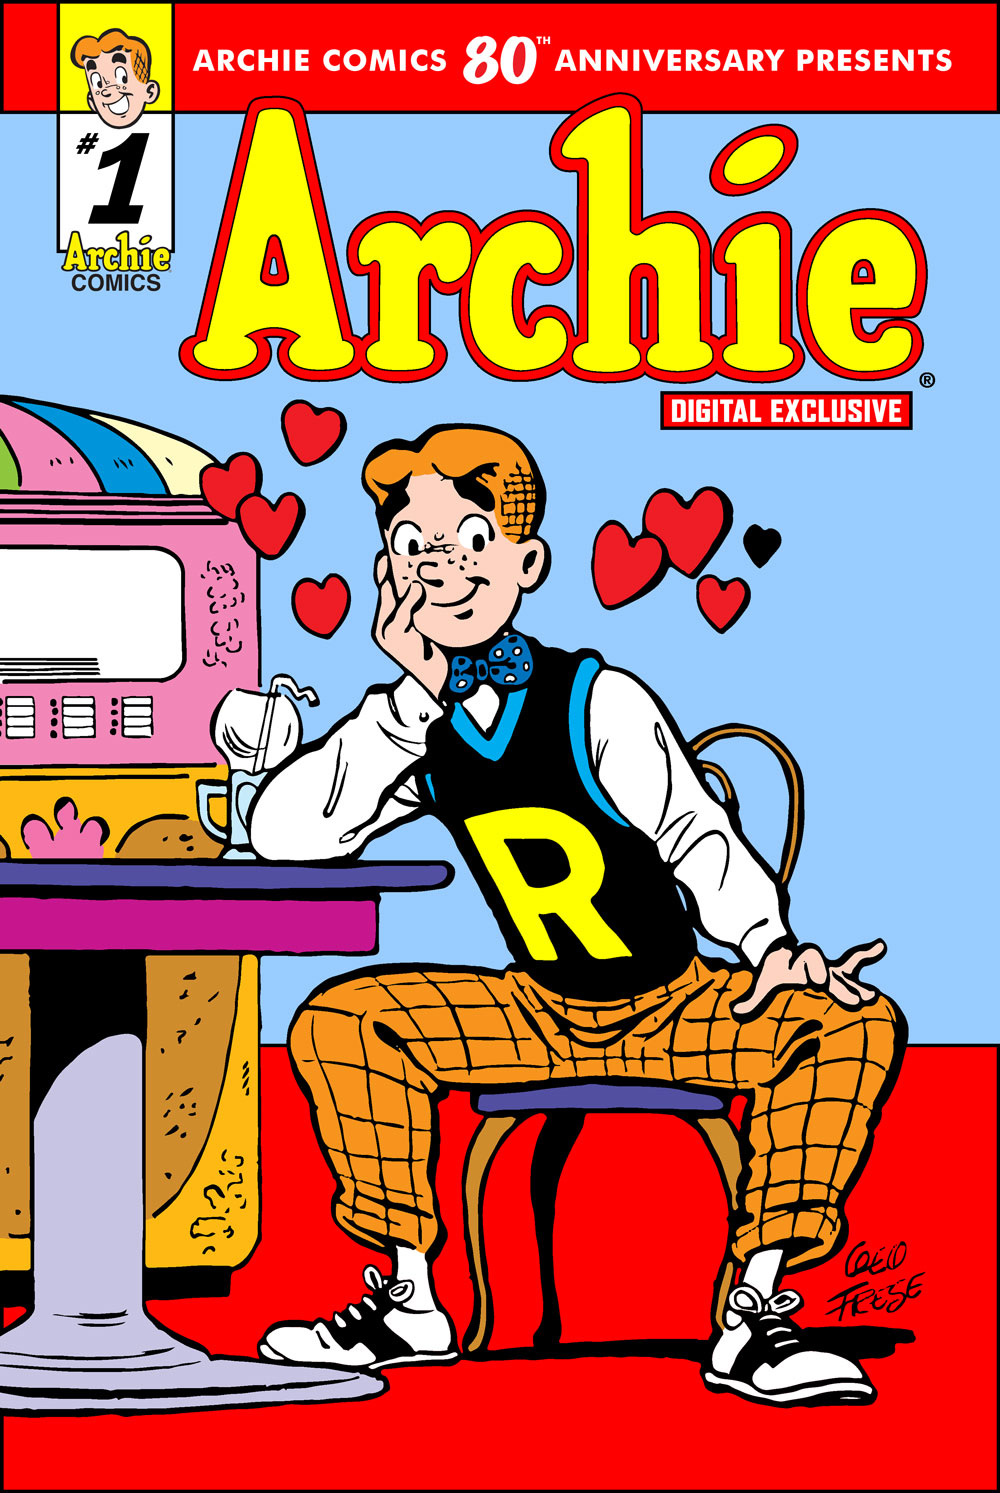 Archie Circle Comics April May 2020 Solicitations First Comics News